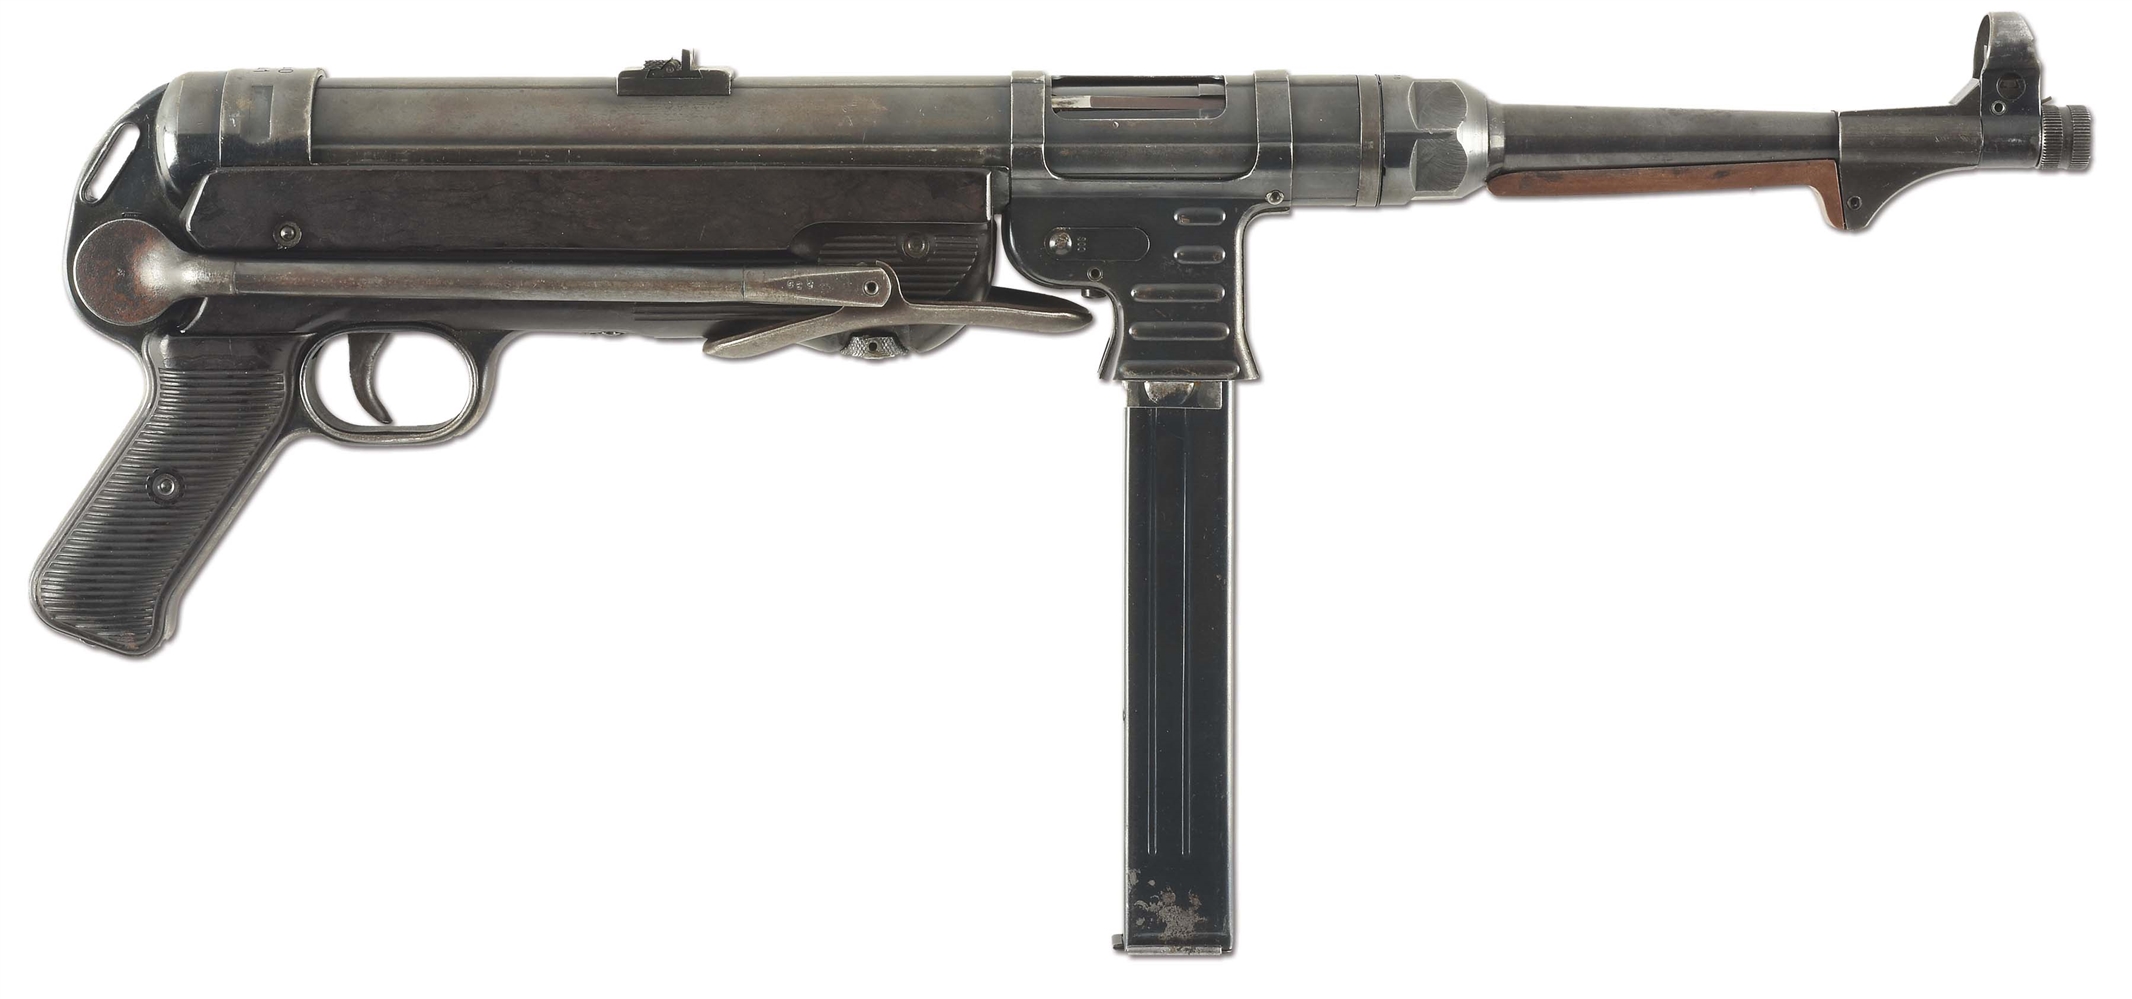 (N) FANTASTIC ALL ORIGINAL HAENEL MANUFACTURED MATCHING NUMBERED GERMAN WW2 MP-40 MACHINE GUN (CURIO AND RELIC).